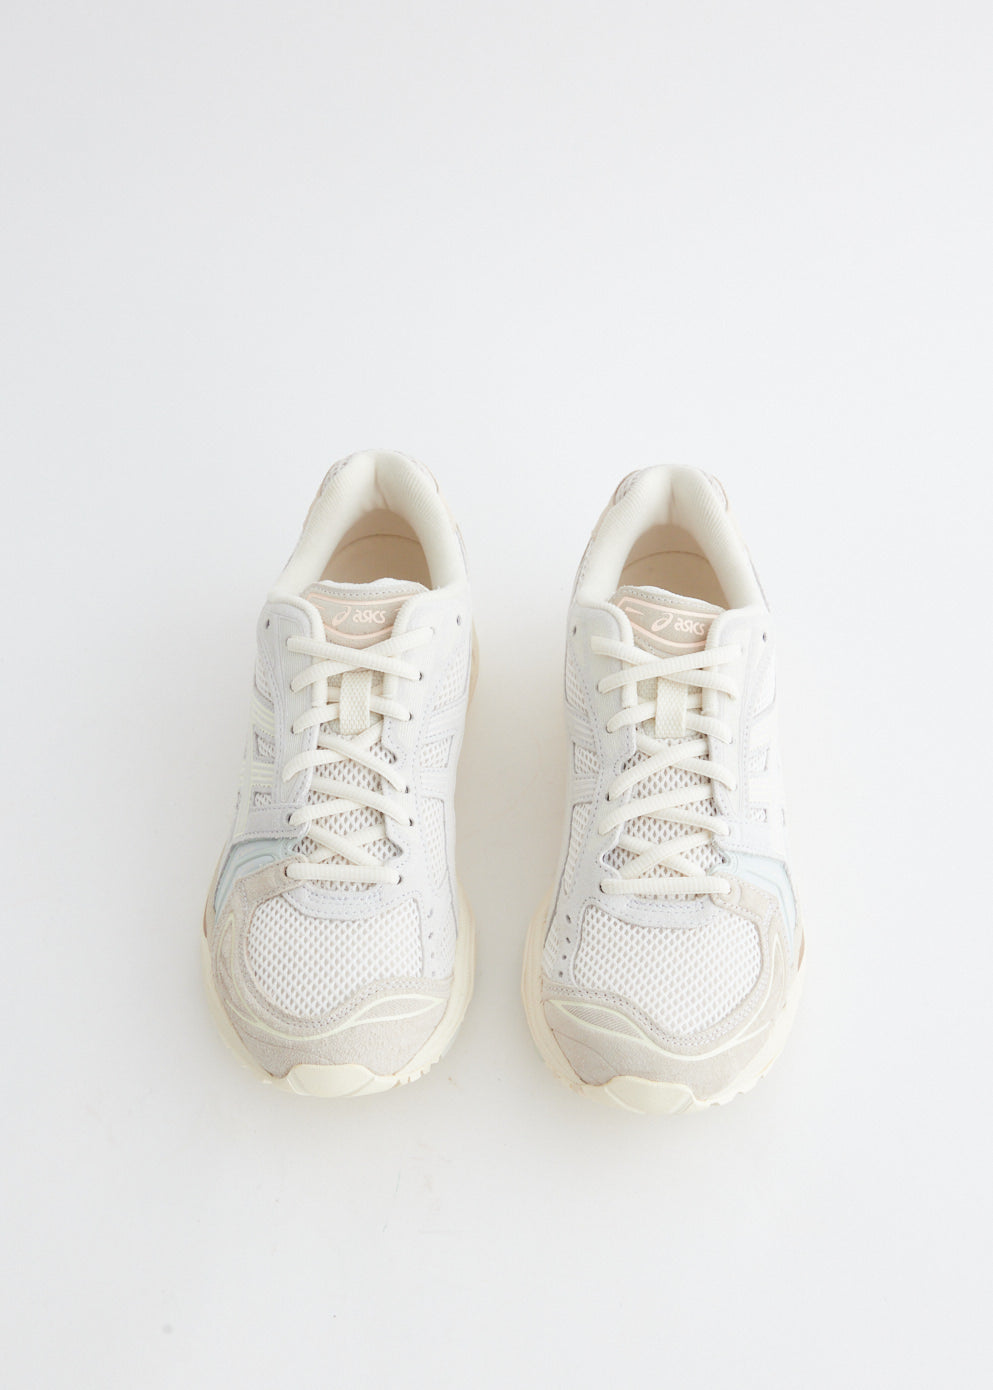 Gel-Kayano 14 'Cream Blush' Sneakers